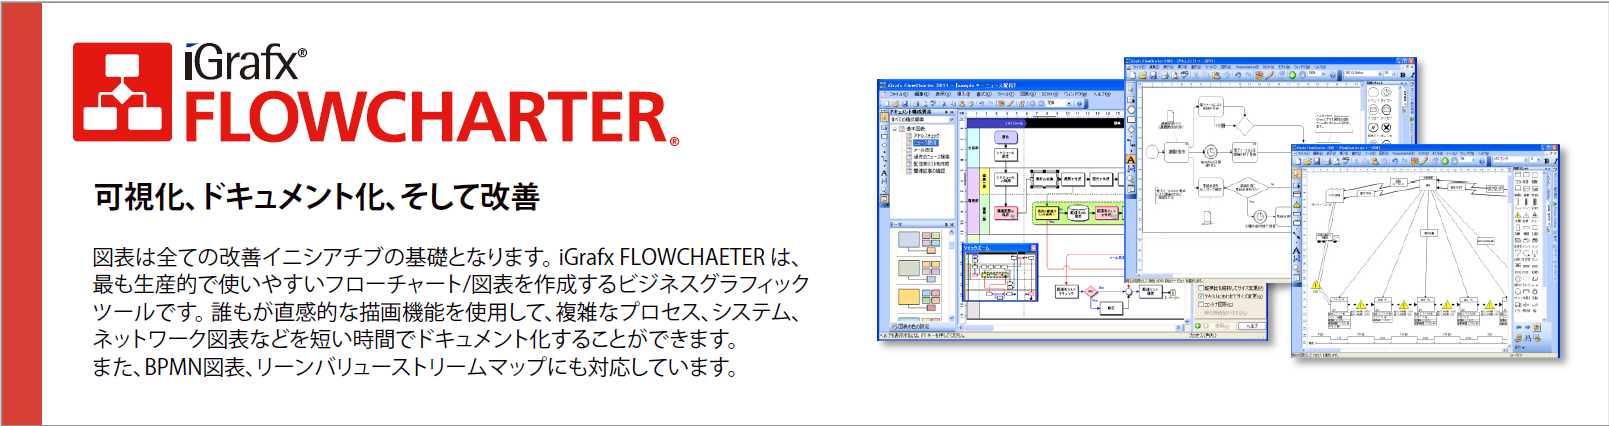 pic-flowcharter